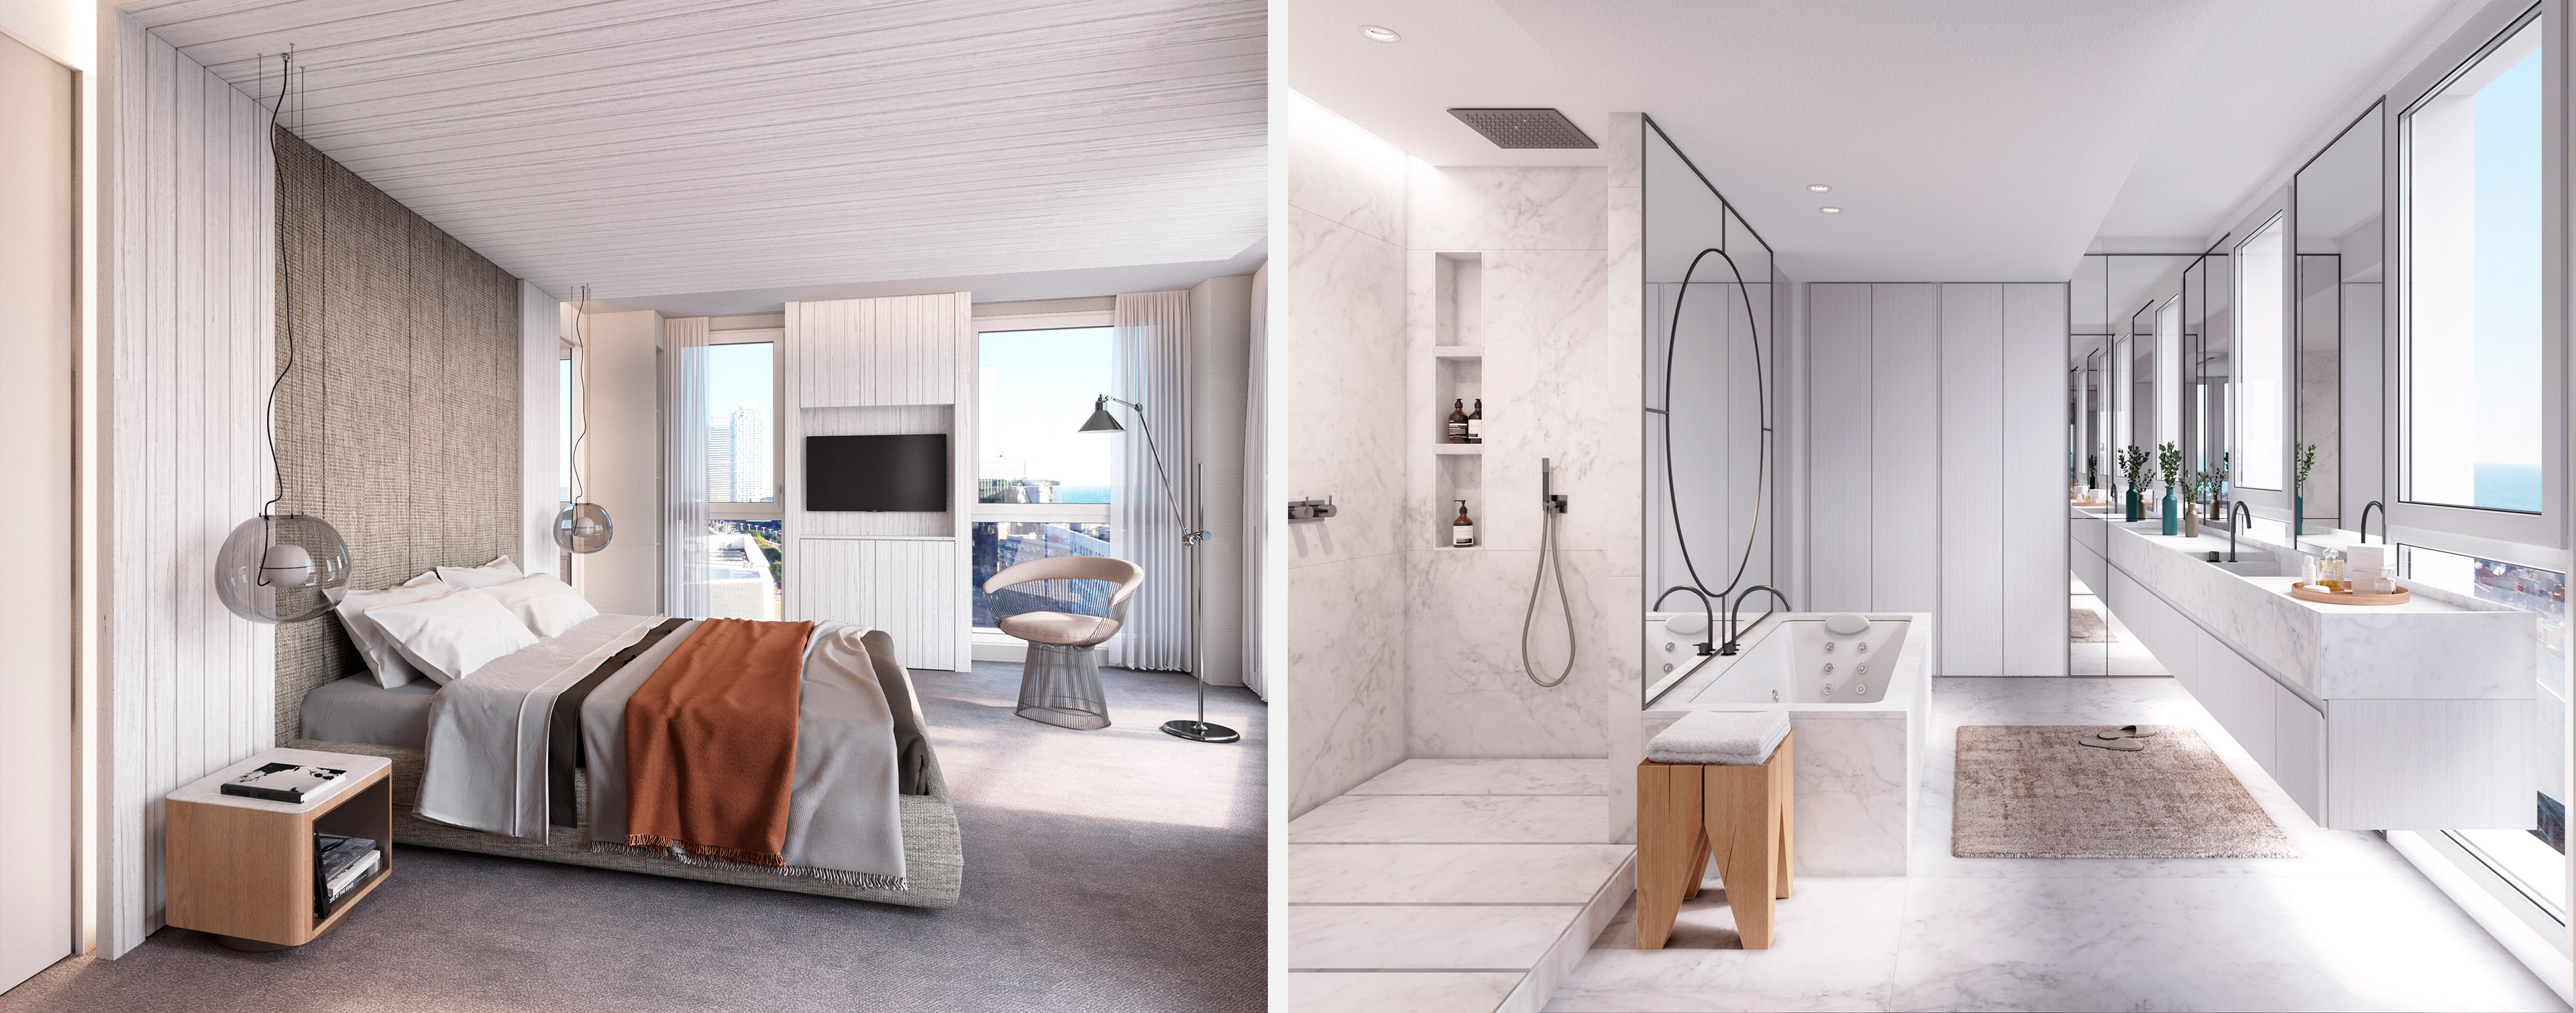 luv studio luxury architects barcelona dr aiguader penthouse IMG 02 - Dr Aiguader Penthouse